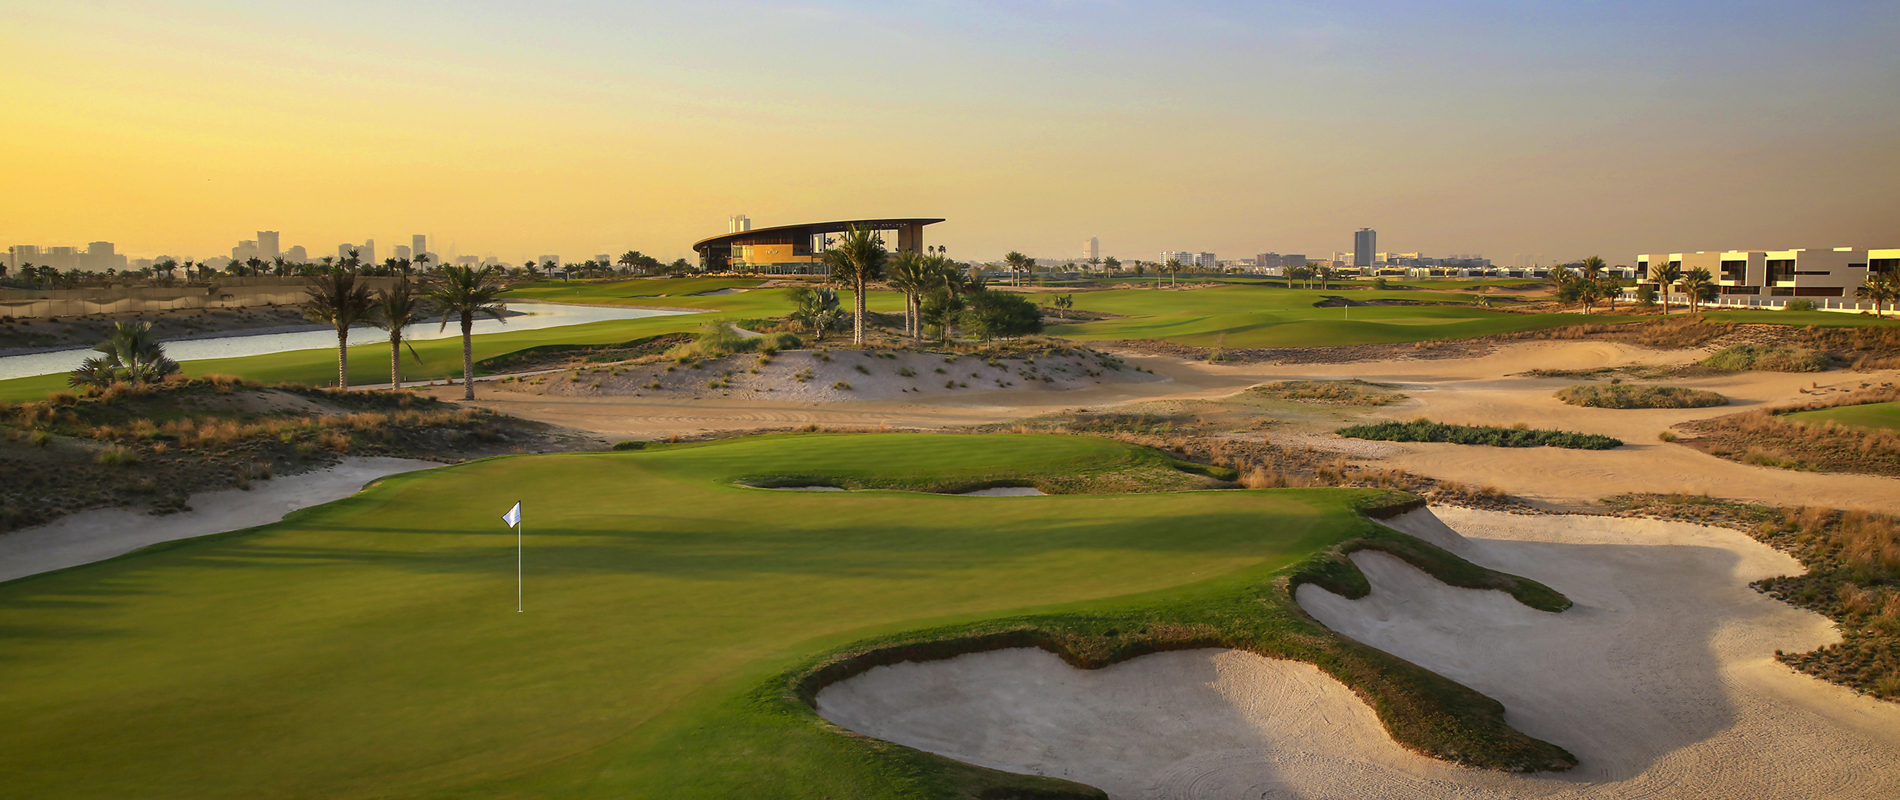 Dubai Golf CIty